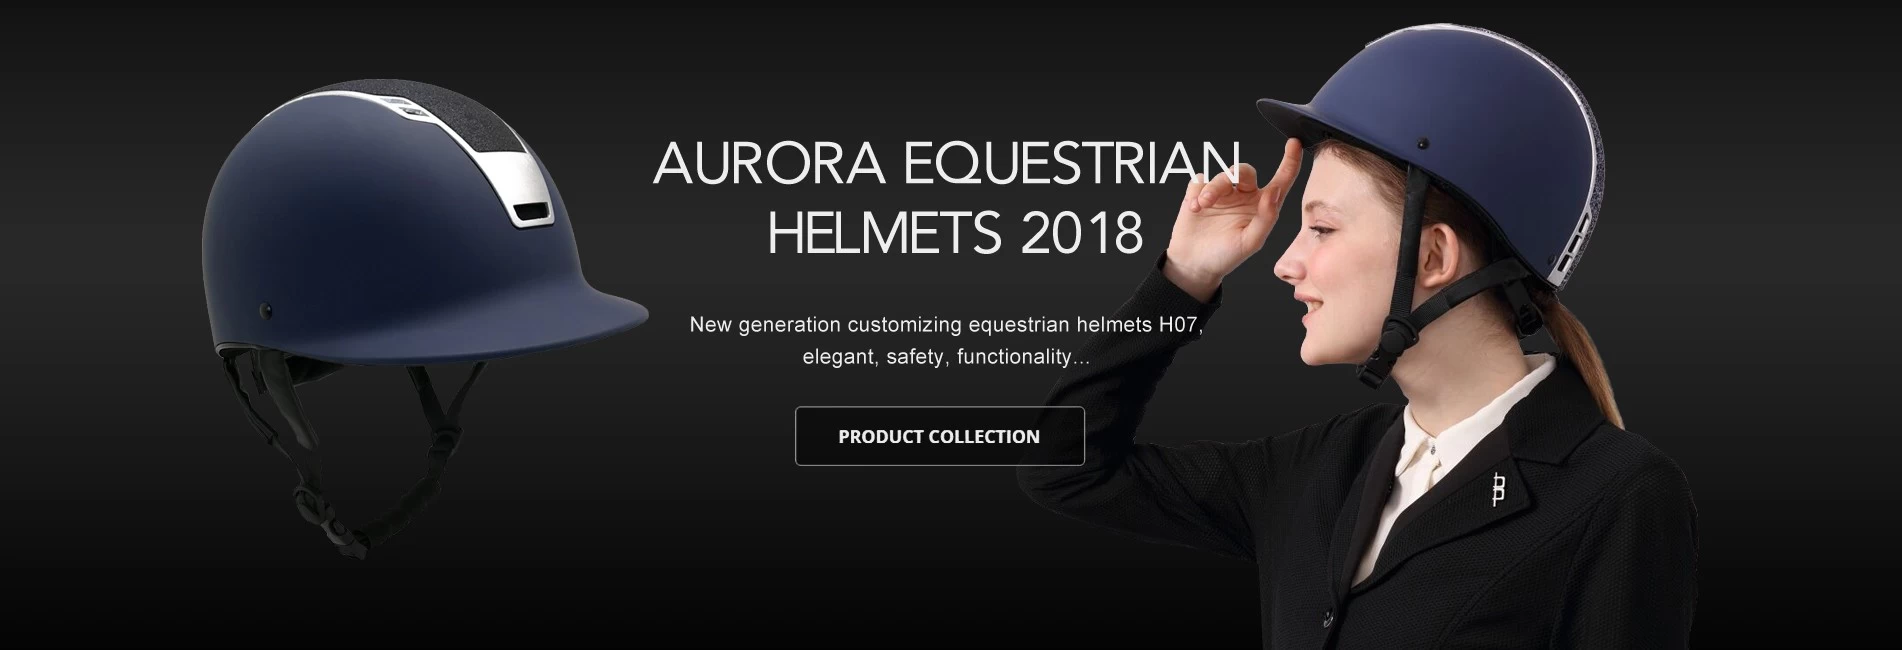 Equestrian helmets manufacture